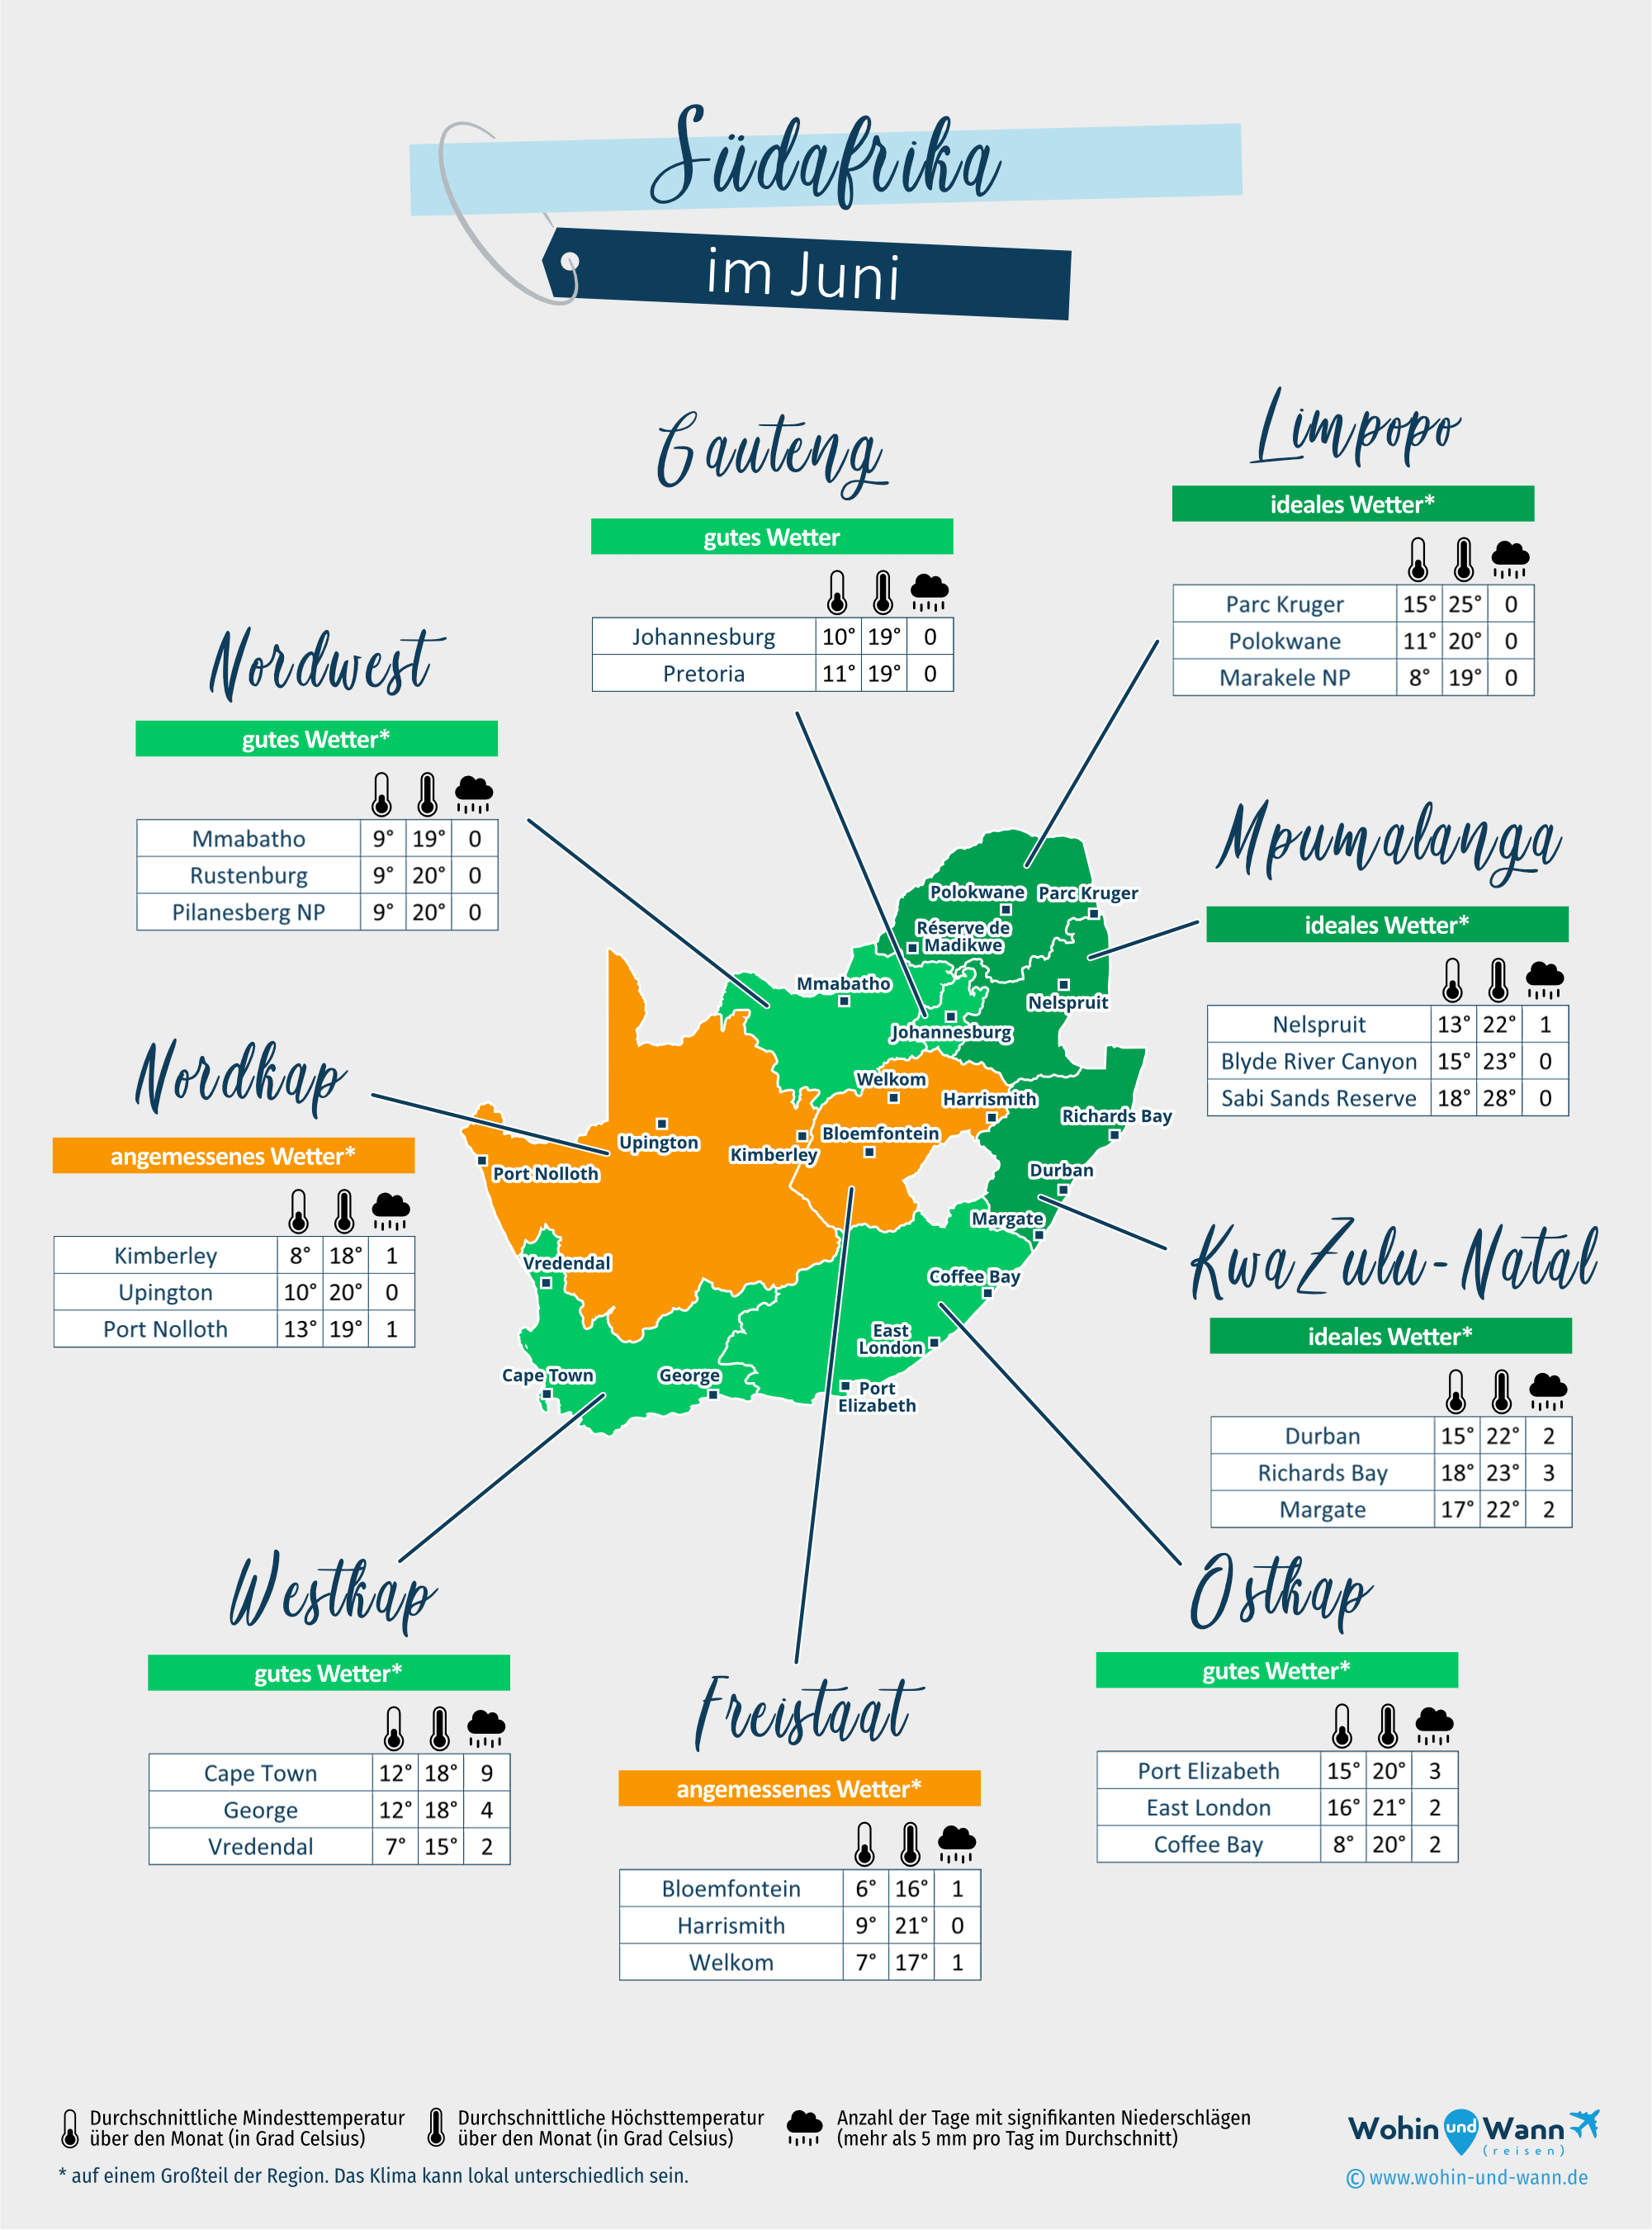 Südafrika: Wetterkarte im Juni in verschiedenen Regionen